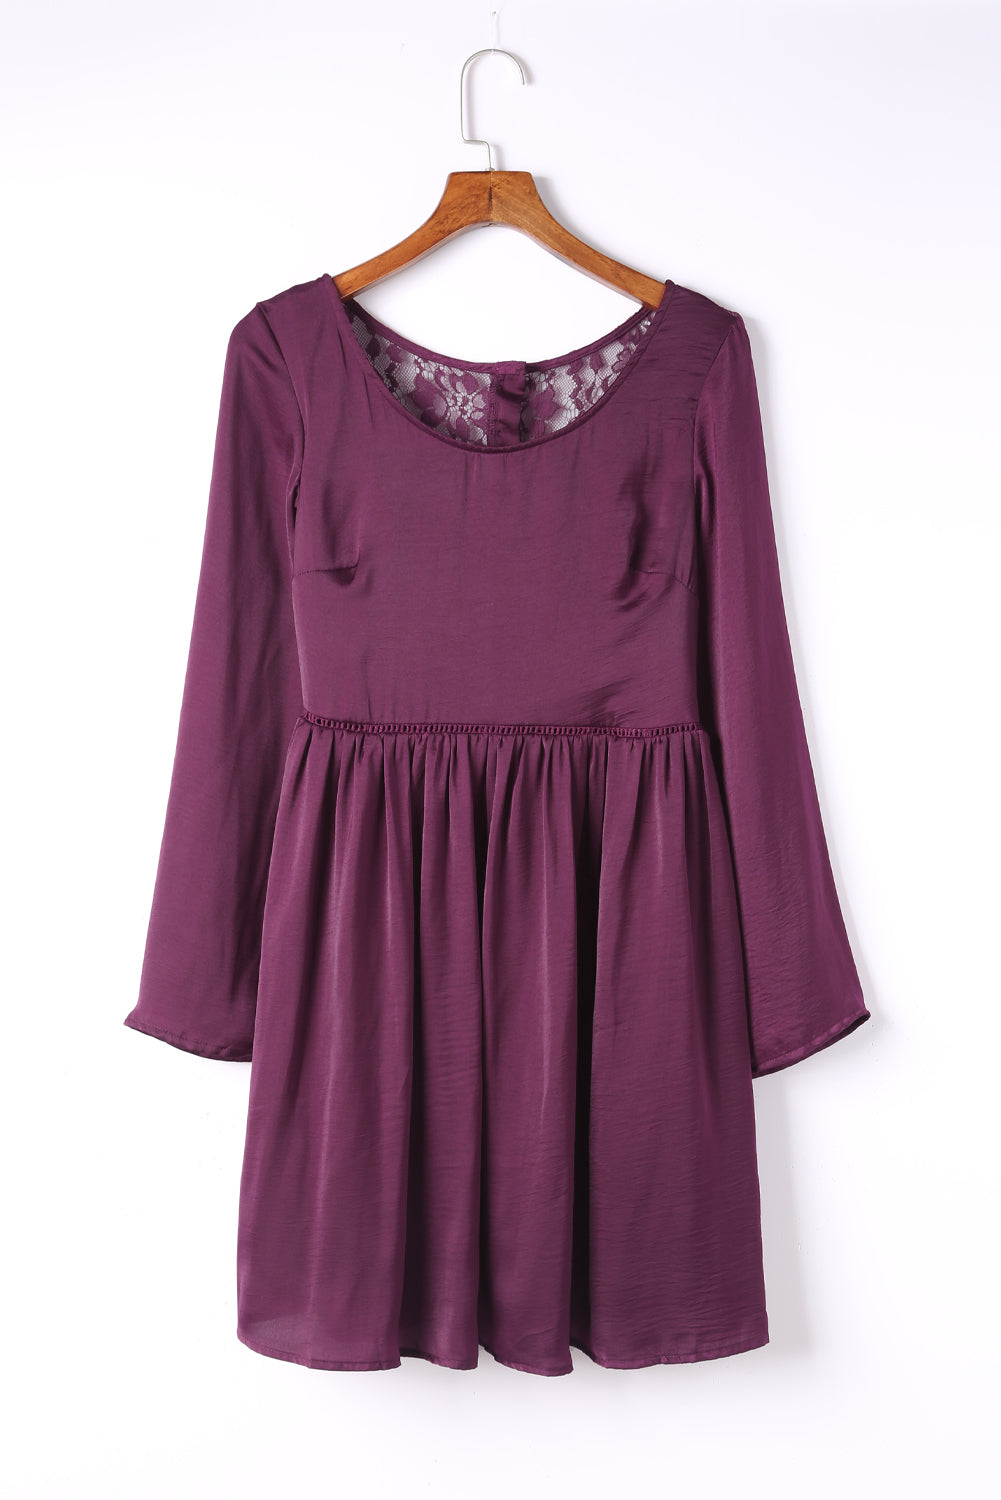 Purple Buttoned Sheer Lace Back Long Sleeve Dress